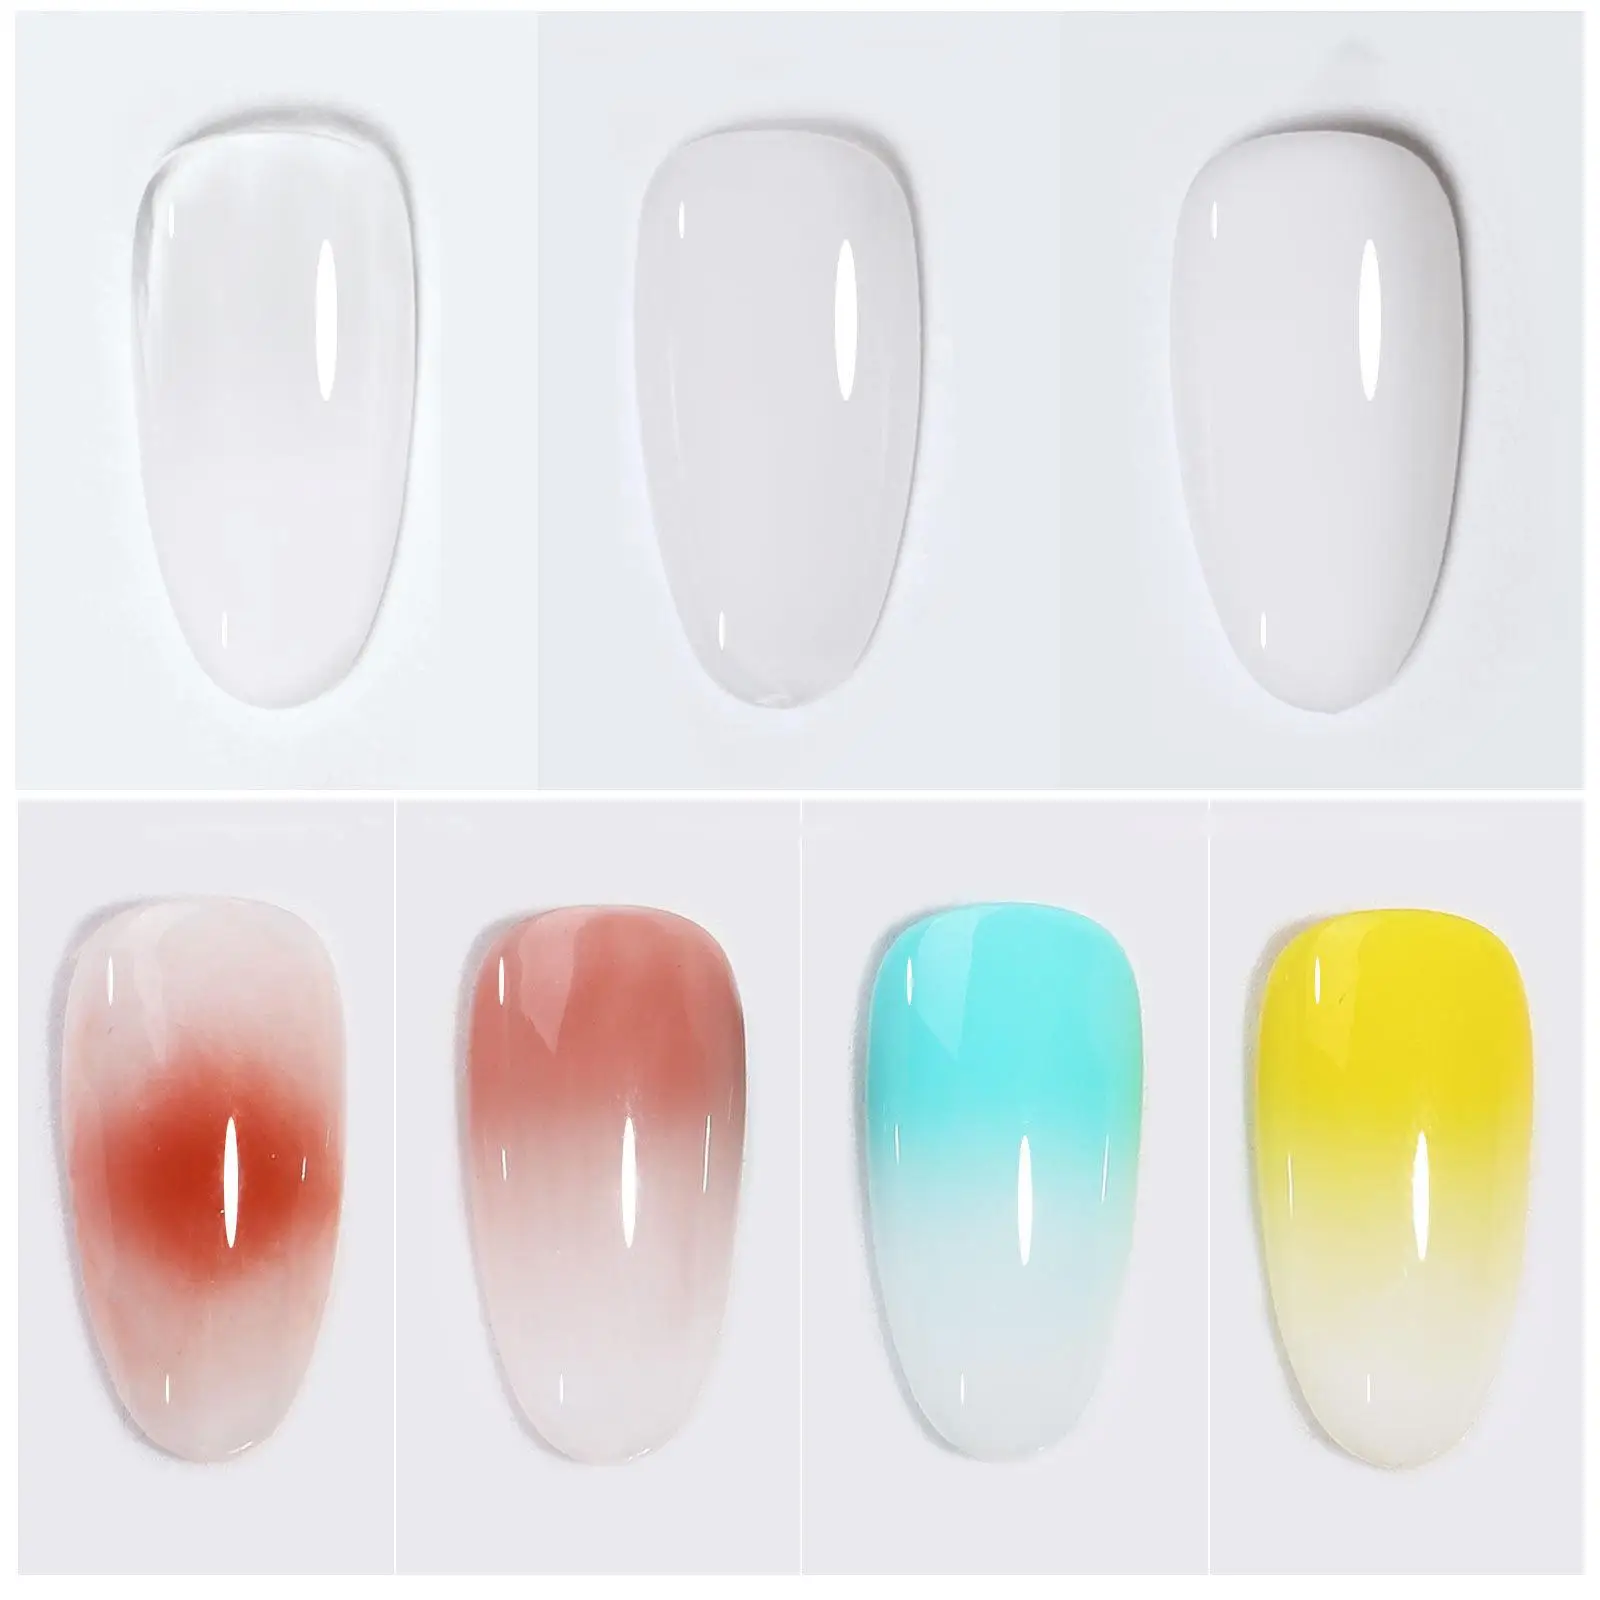 Gel Nail Polish Manicure Spring Summer Nail Gel Colors Popular Milk Translucent Personal Use Soak Off Cured Travel Nail Salon